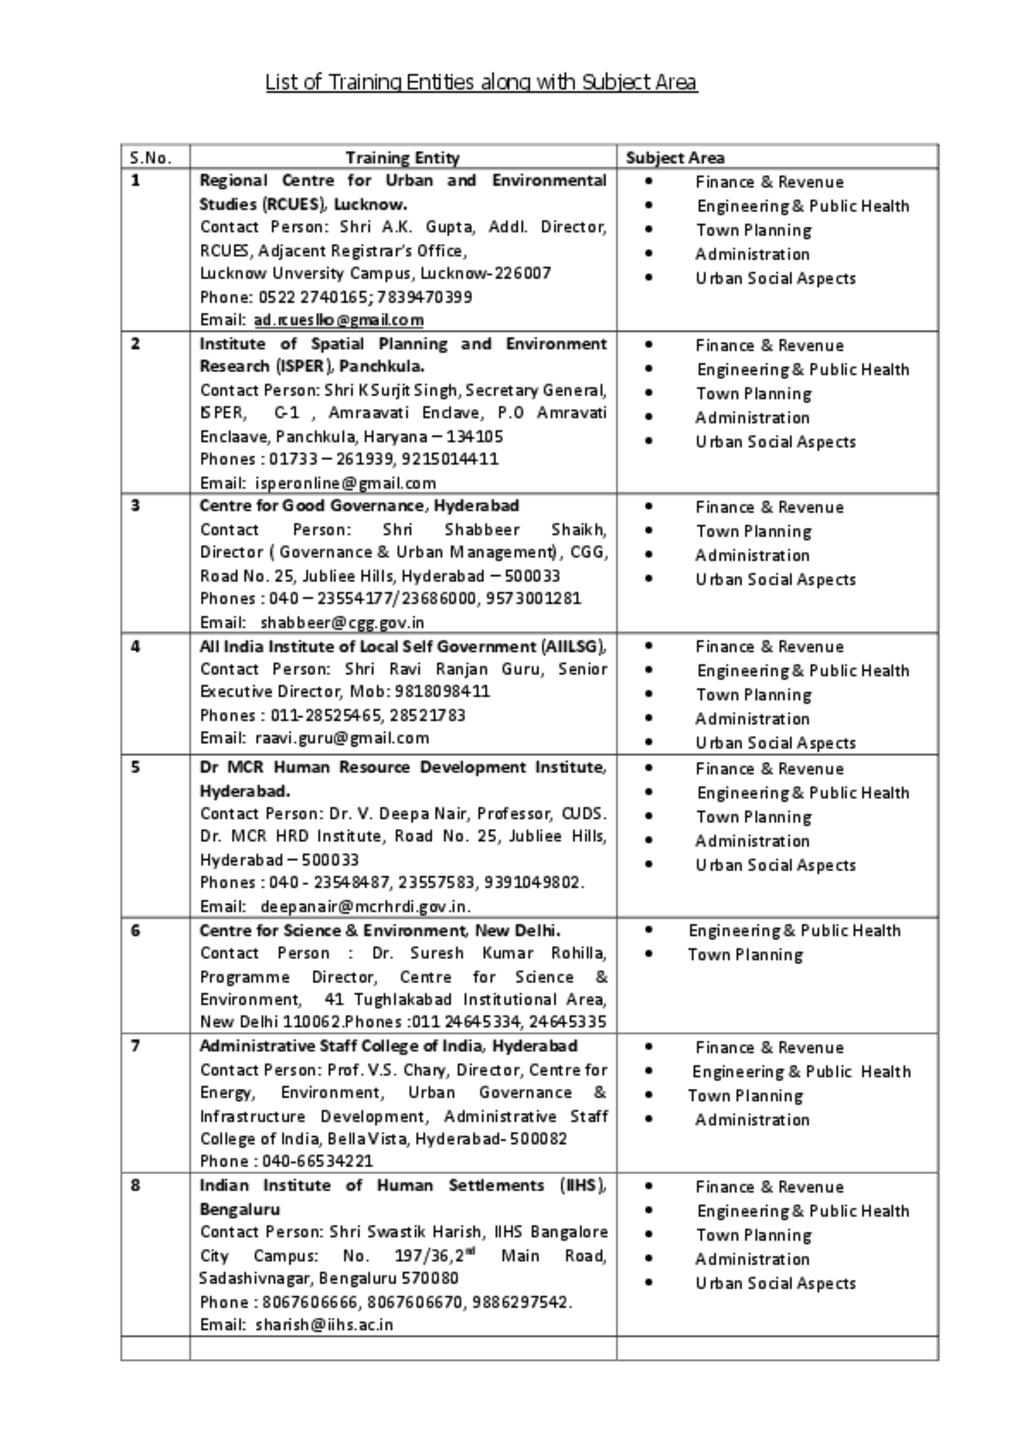 List of 35 empanelled TEs